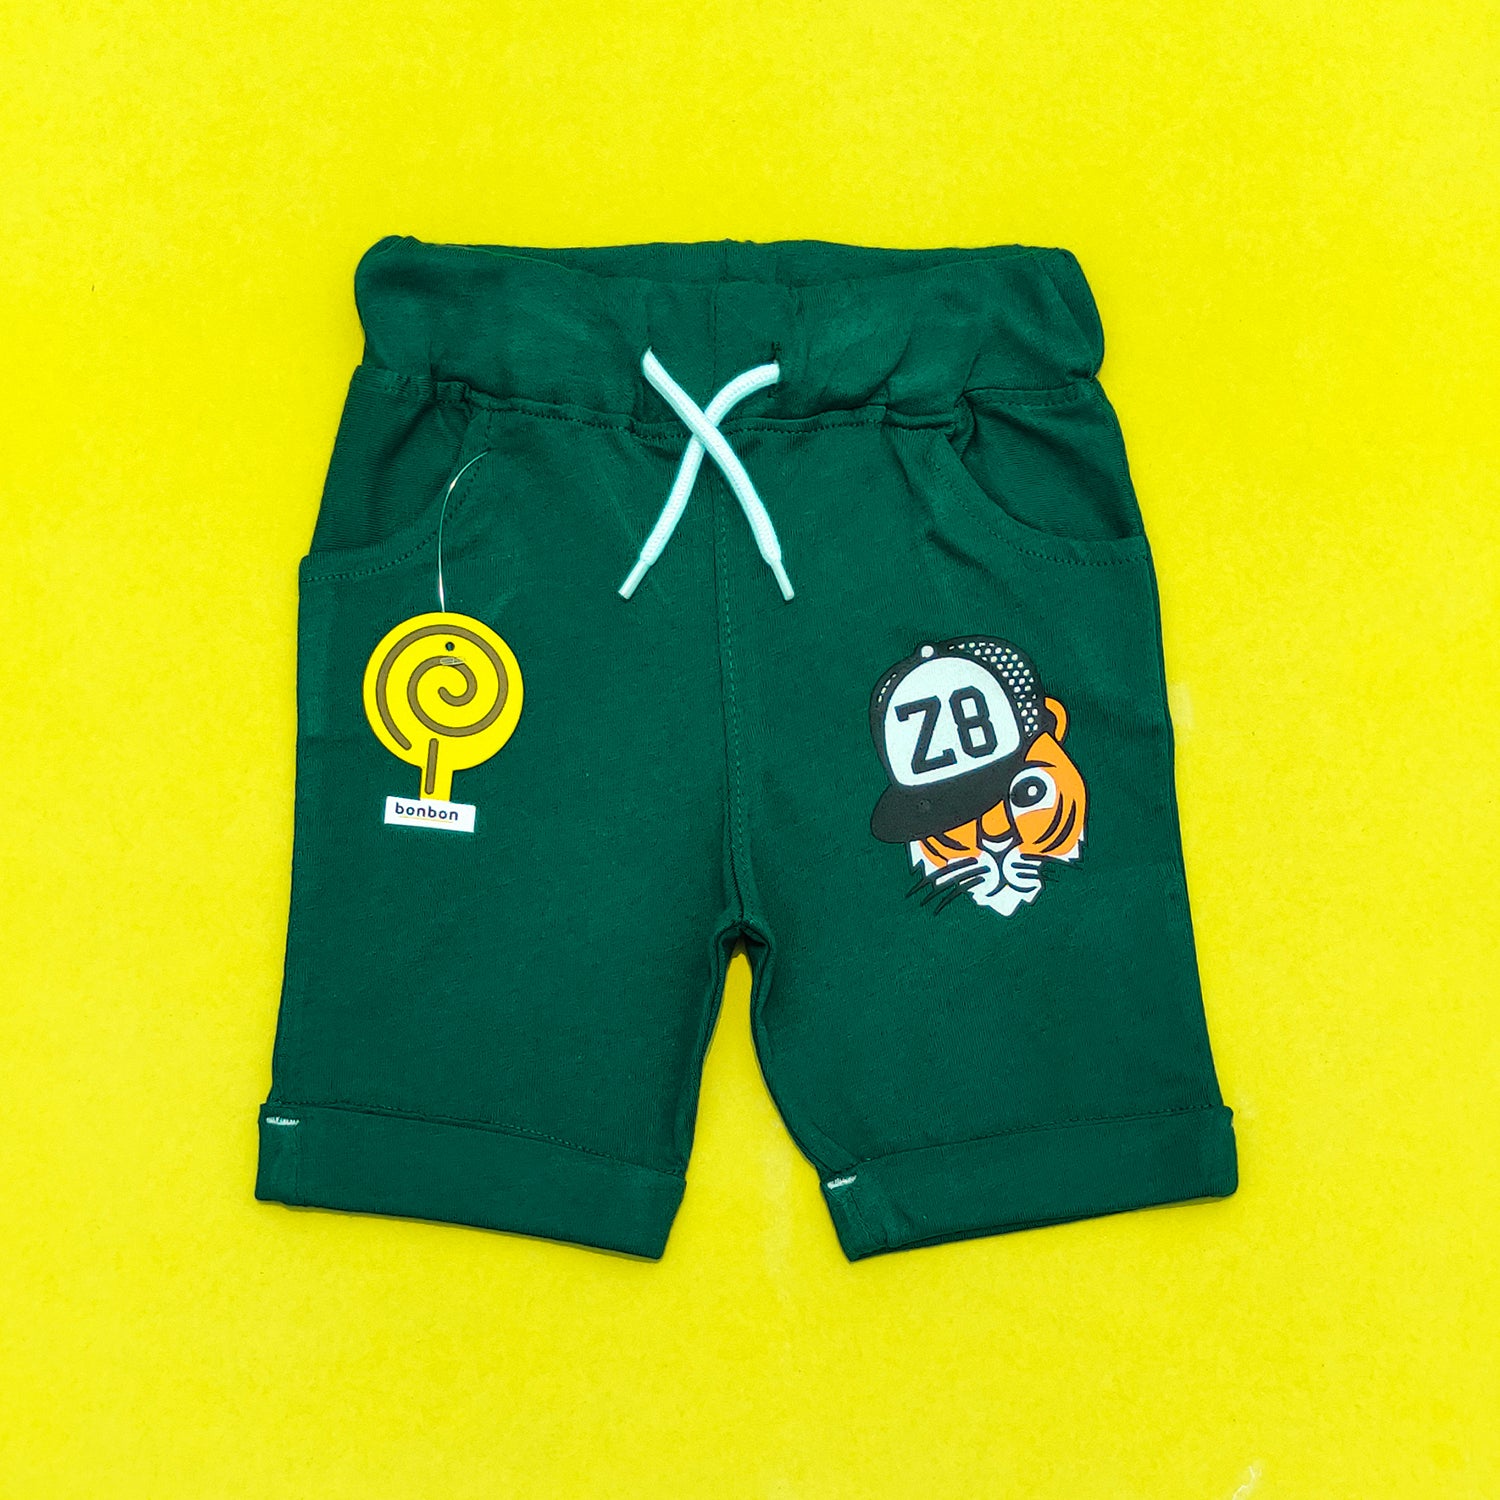 Z8 Green Shorts